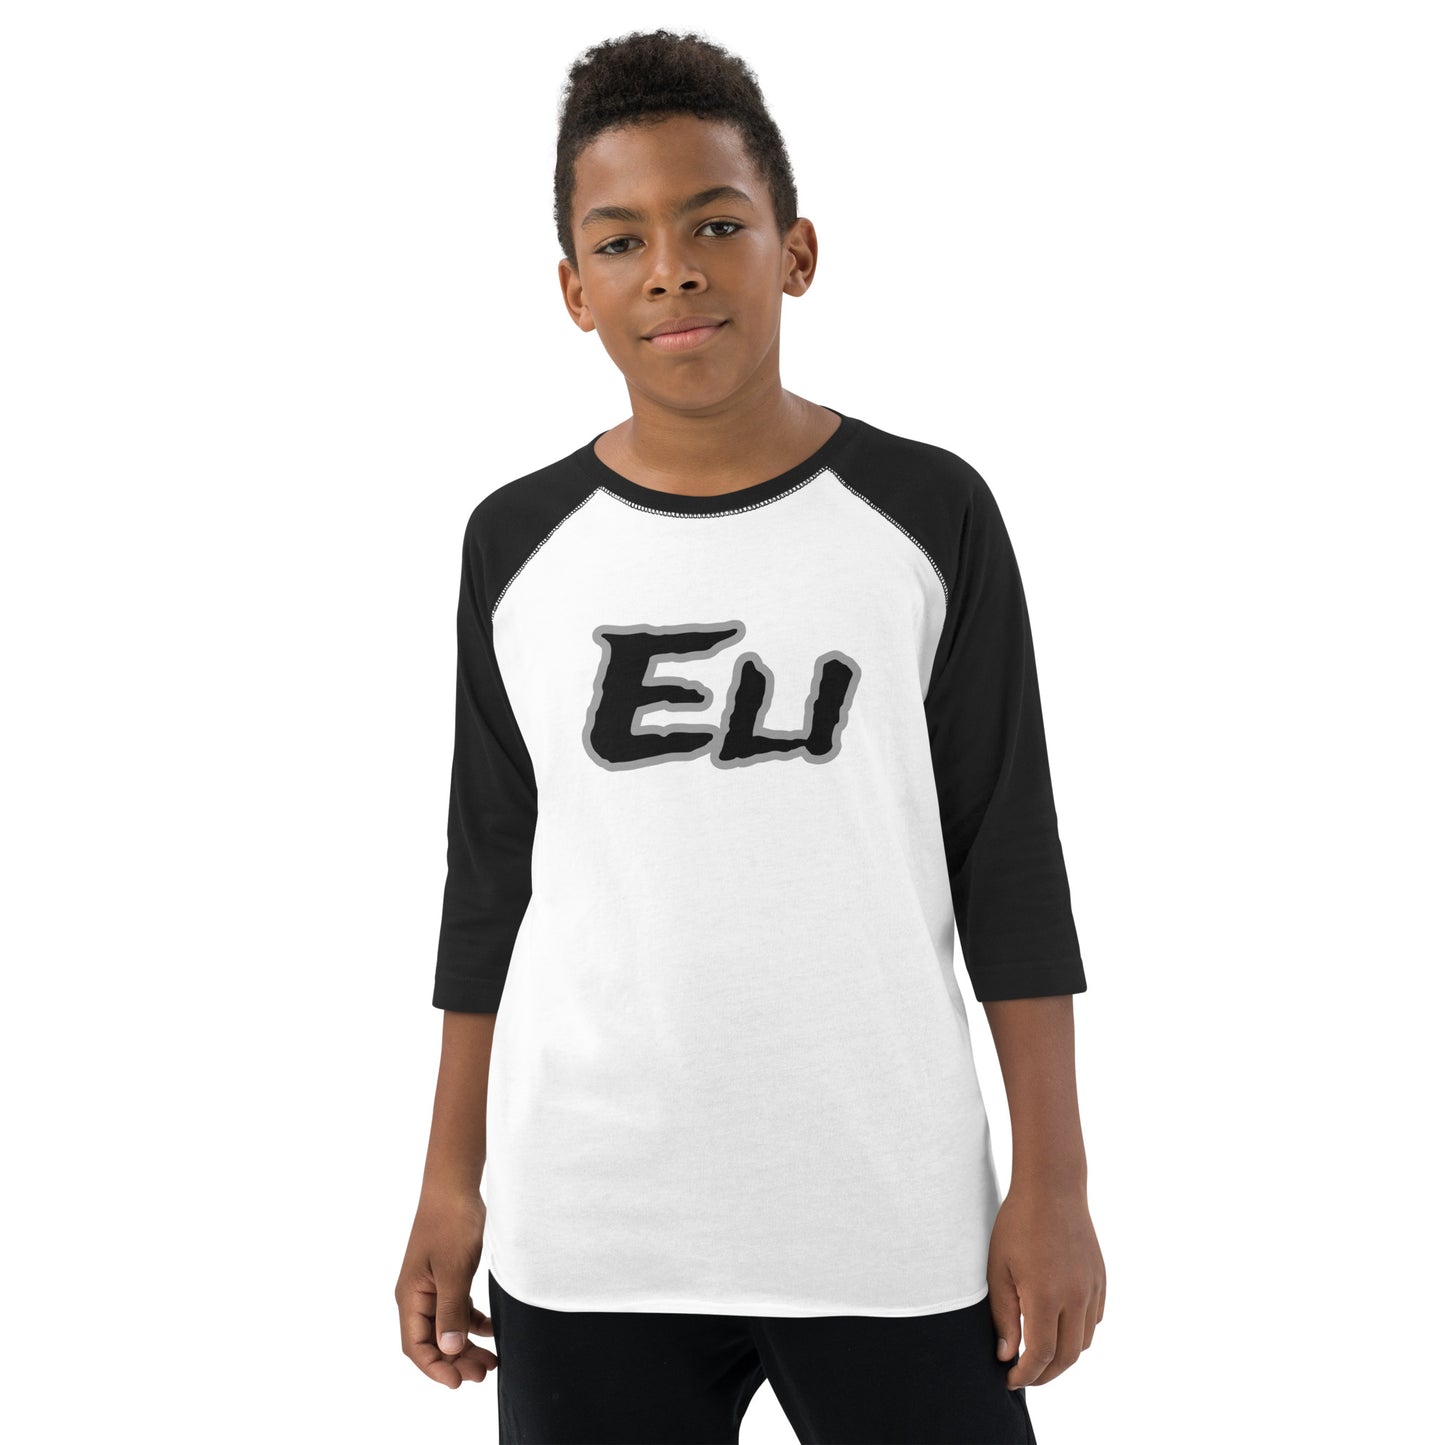 Eli baseball shirt CUSTOM MADE